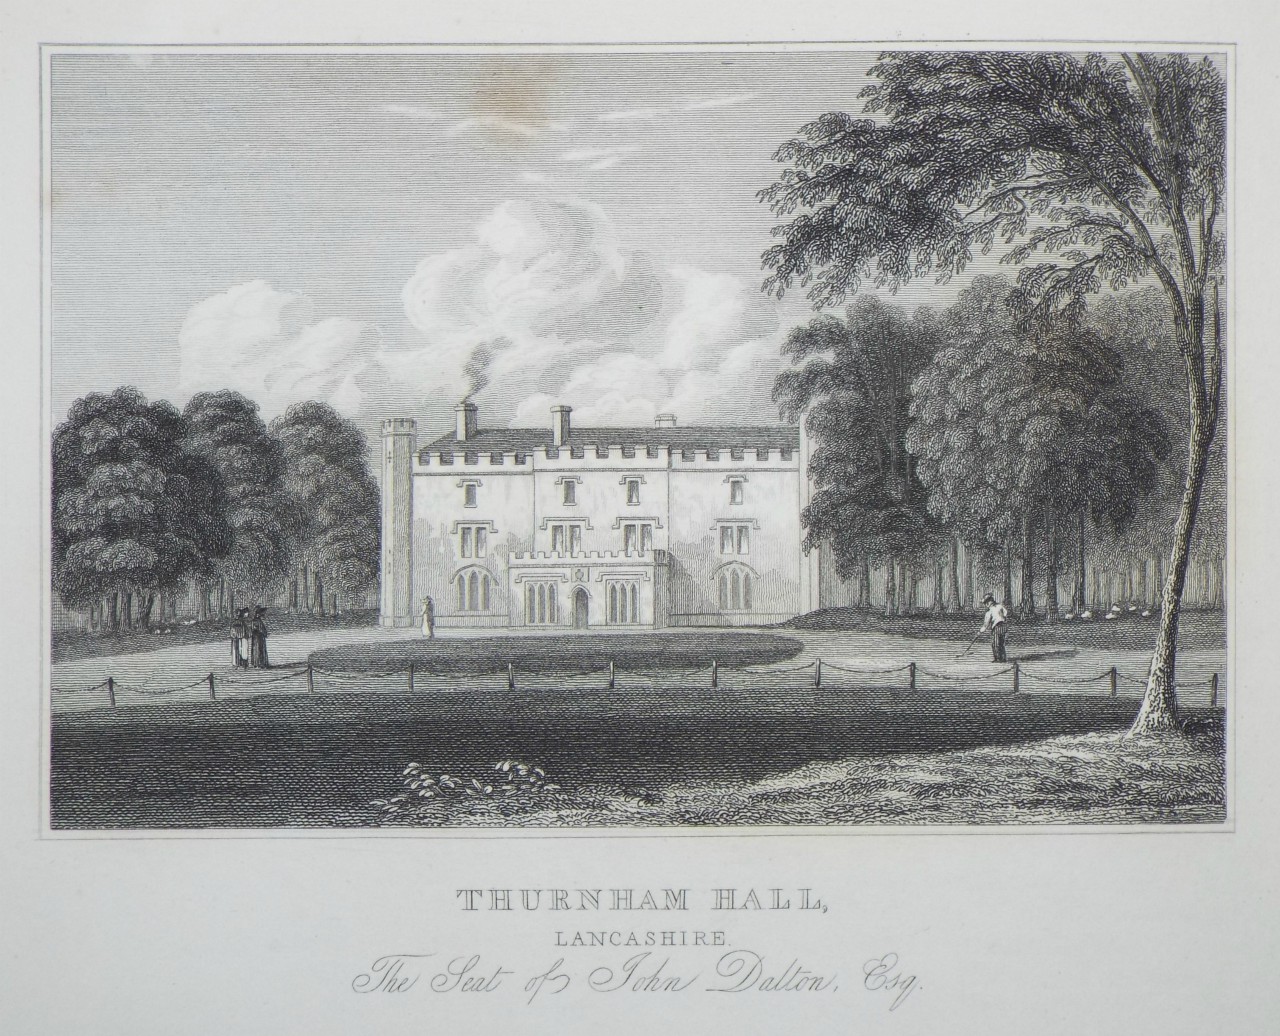 Print - Thurnham Hall, Lancashire. The Seat of John Dalton, Esq. - Heath